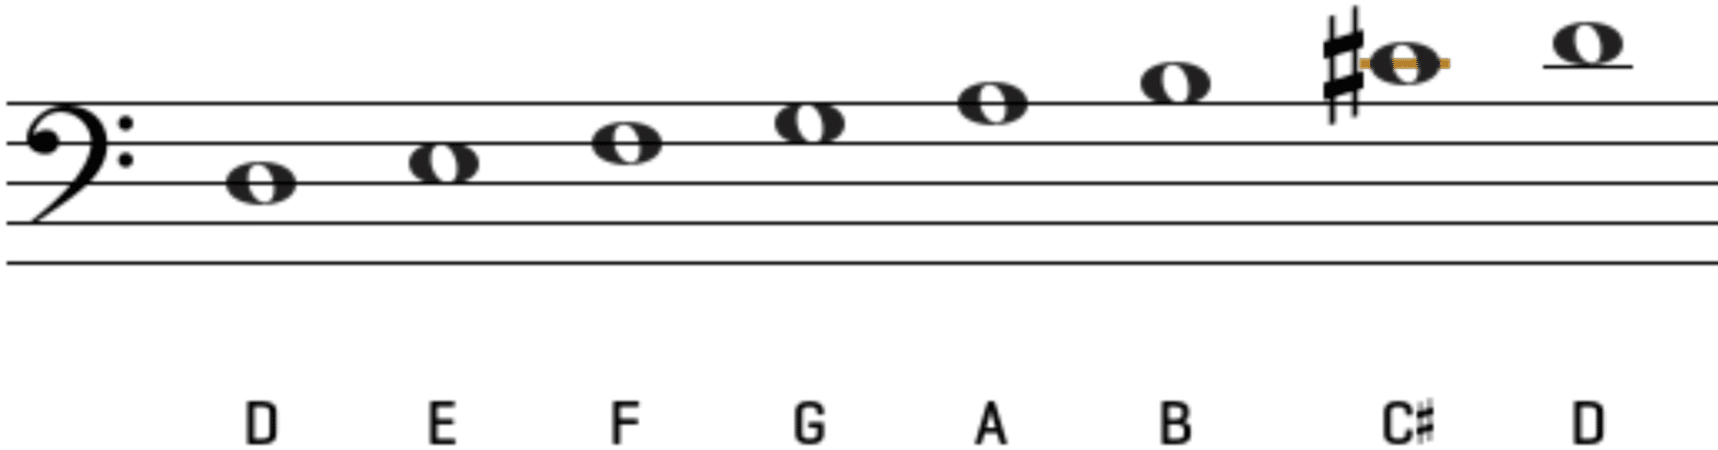 D Melodic minor scale ascending e1705876586196 - Unison